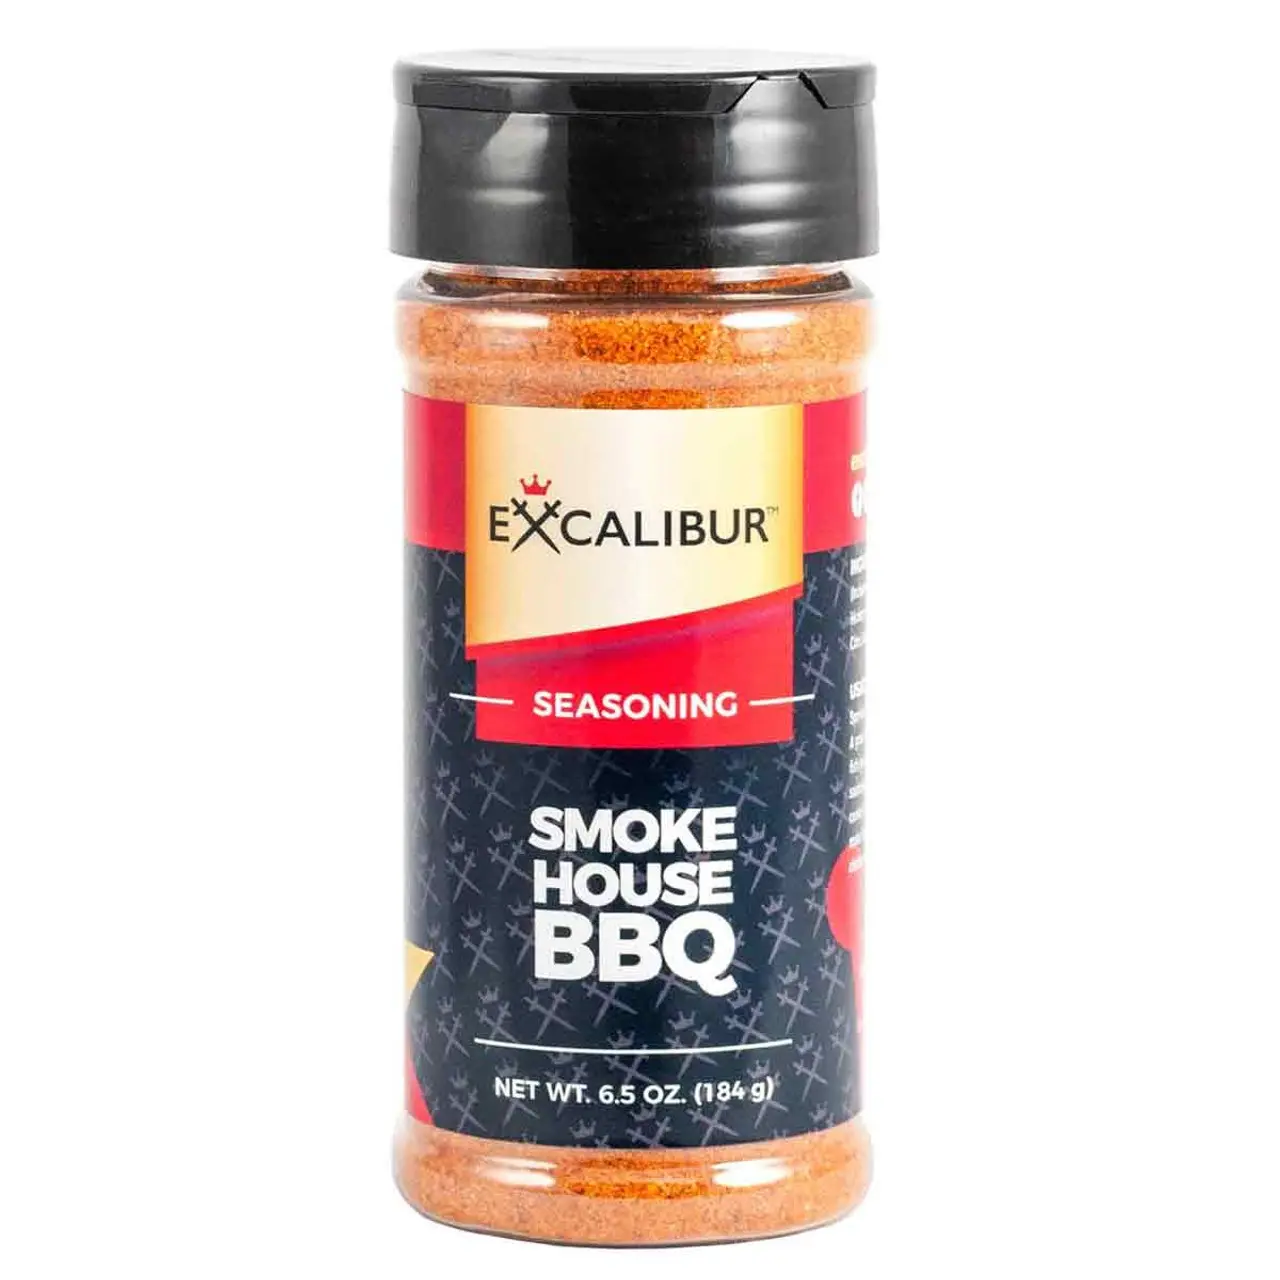 smokehouse bbq seasoning - What is the best seasoning for smoking meat